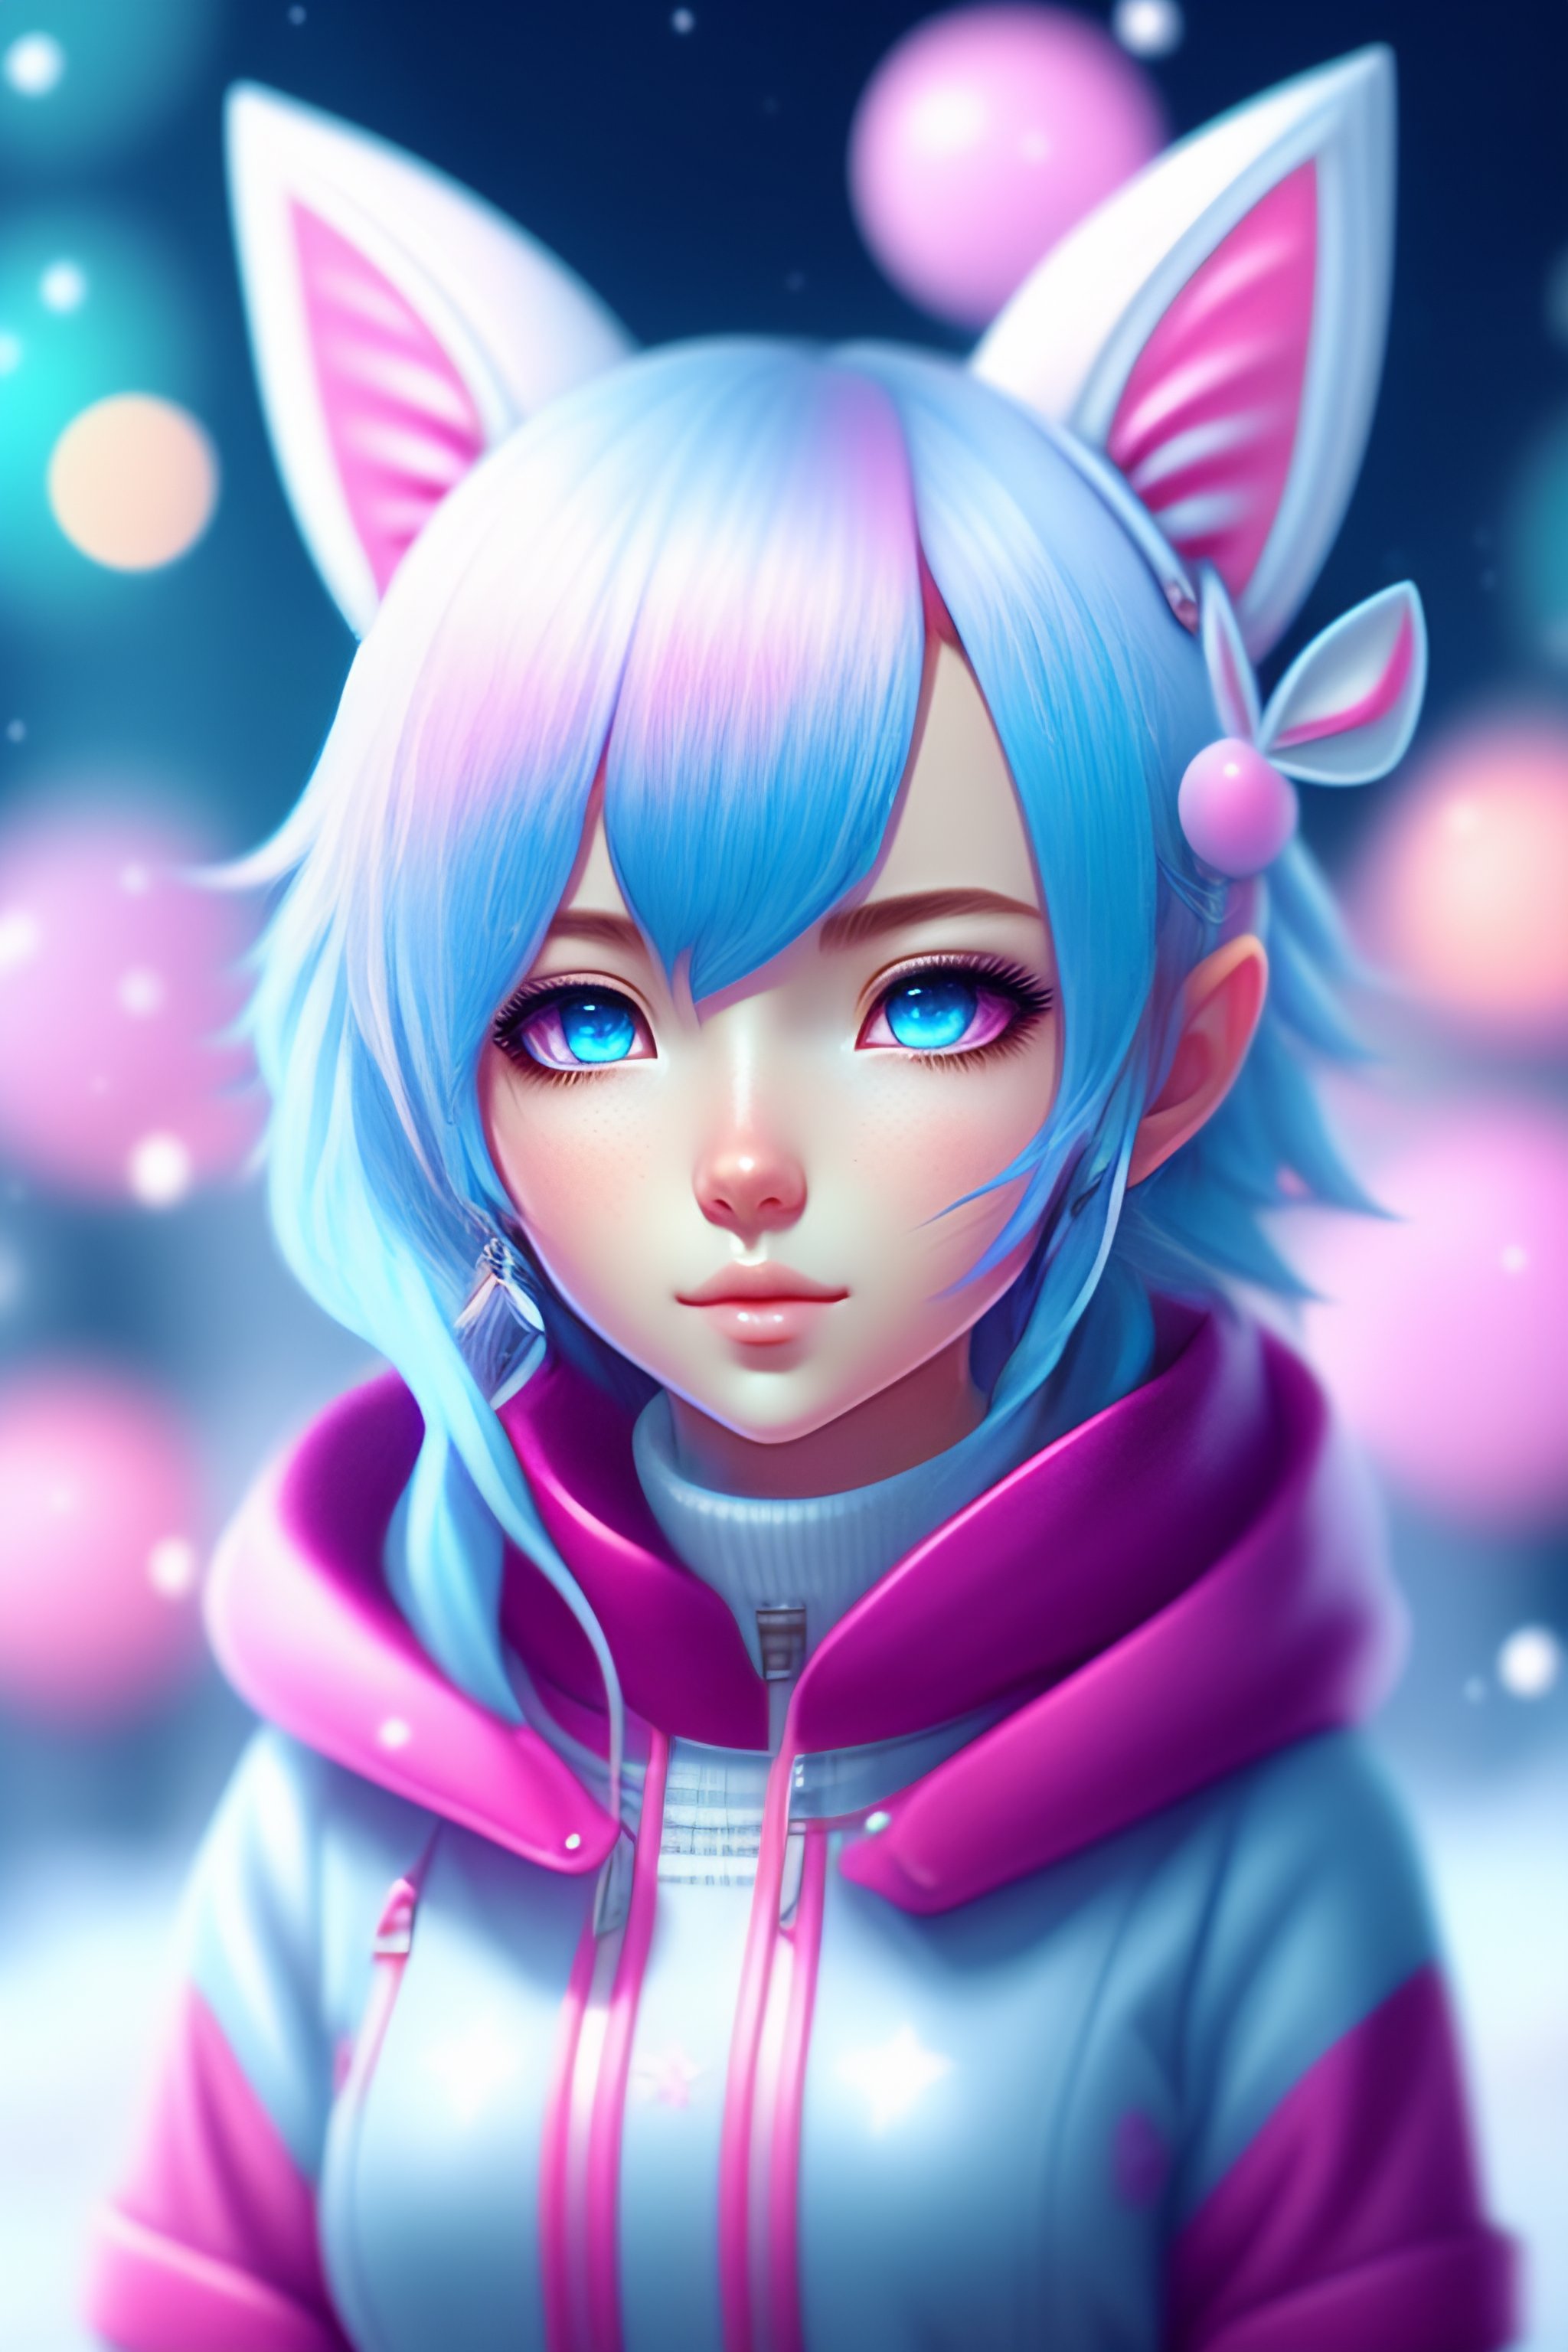 Lexica - Anime,wallpaper like pencil drawing, digital art of cute kawaii  girl with rabbit ears, light blue hair,bob,pink eyes,holding a  Omikuji,backg